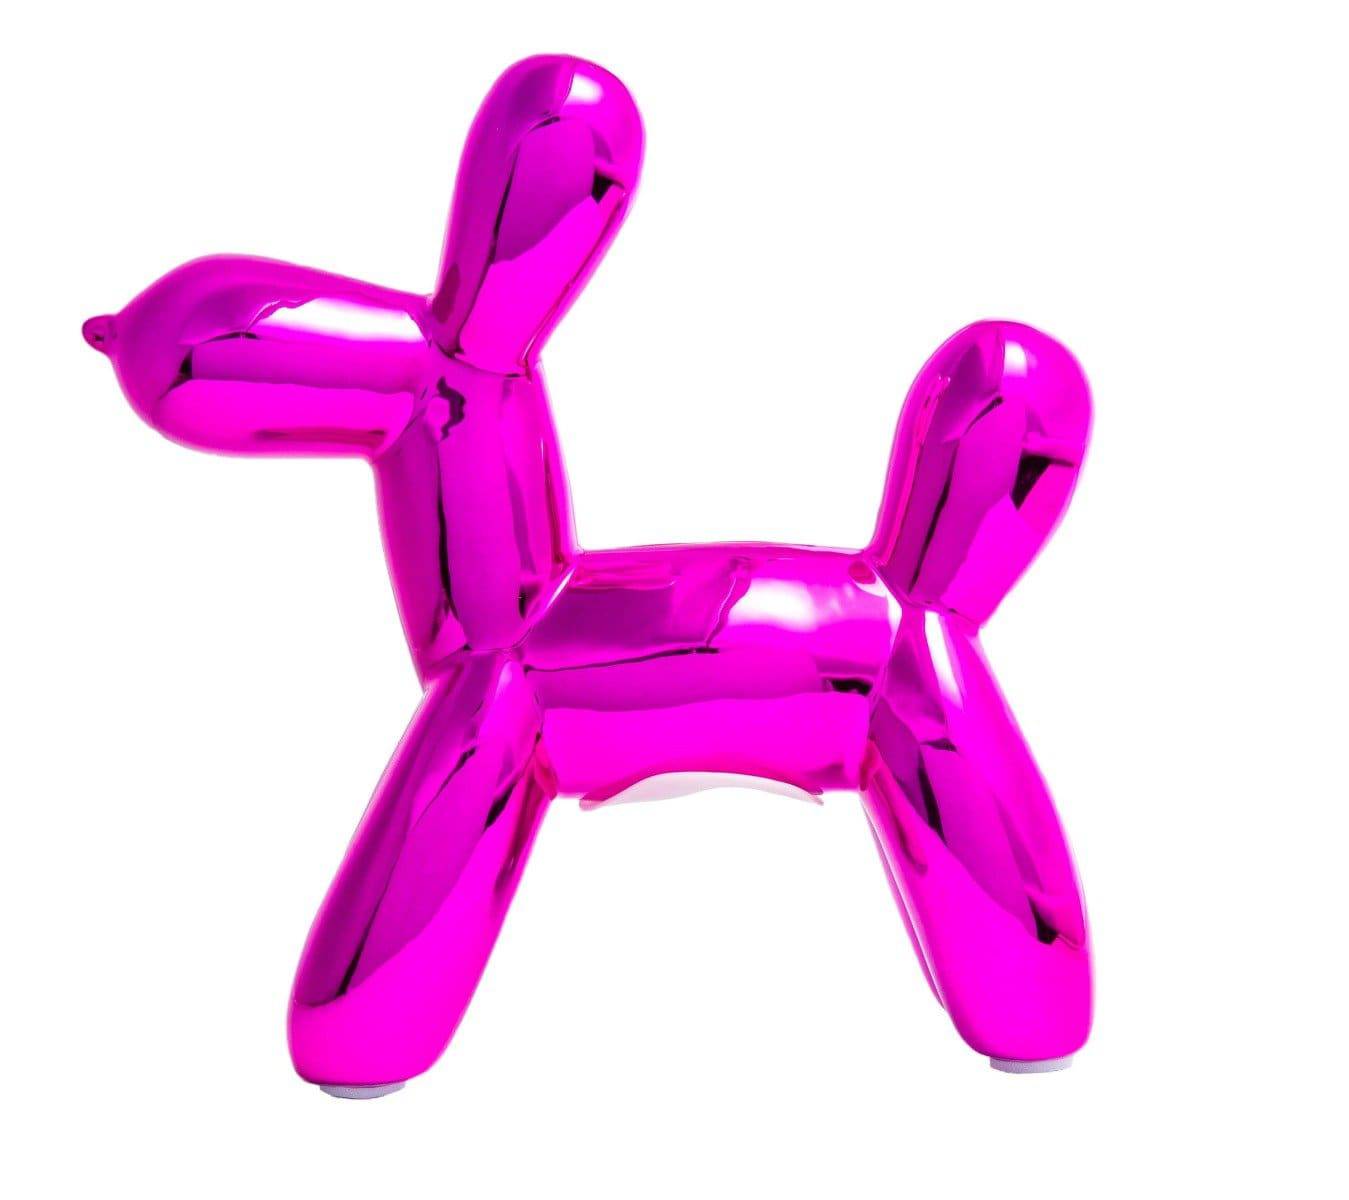 Hot Pink Mini Balloon Dog Bank - 7.5" - Twinkle Twinkle Little One